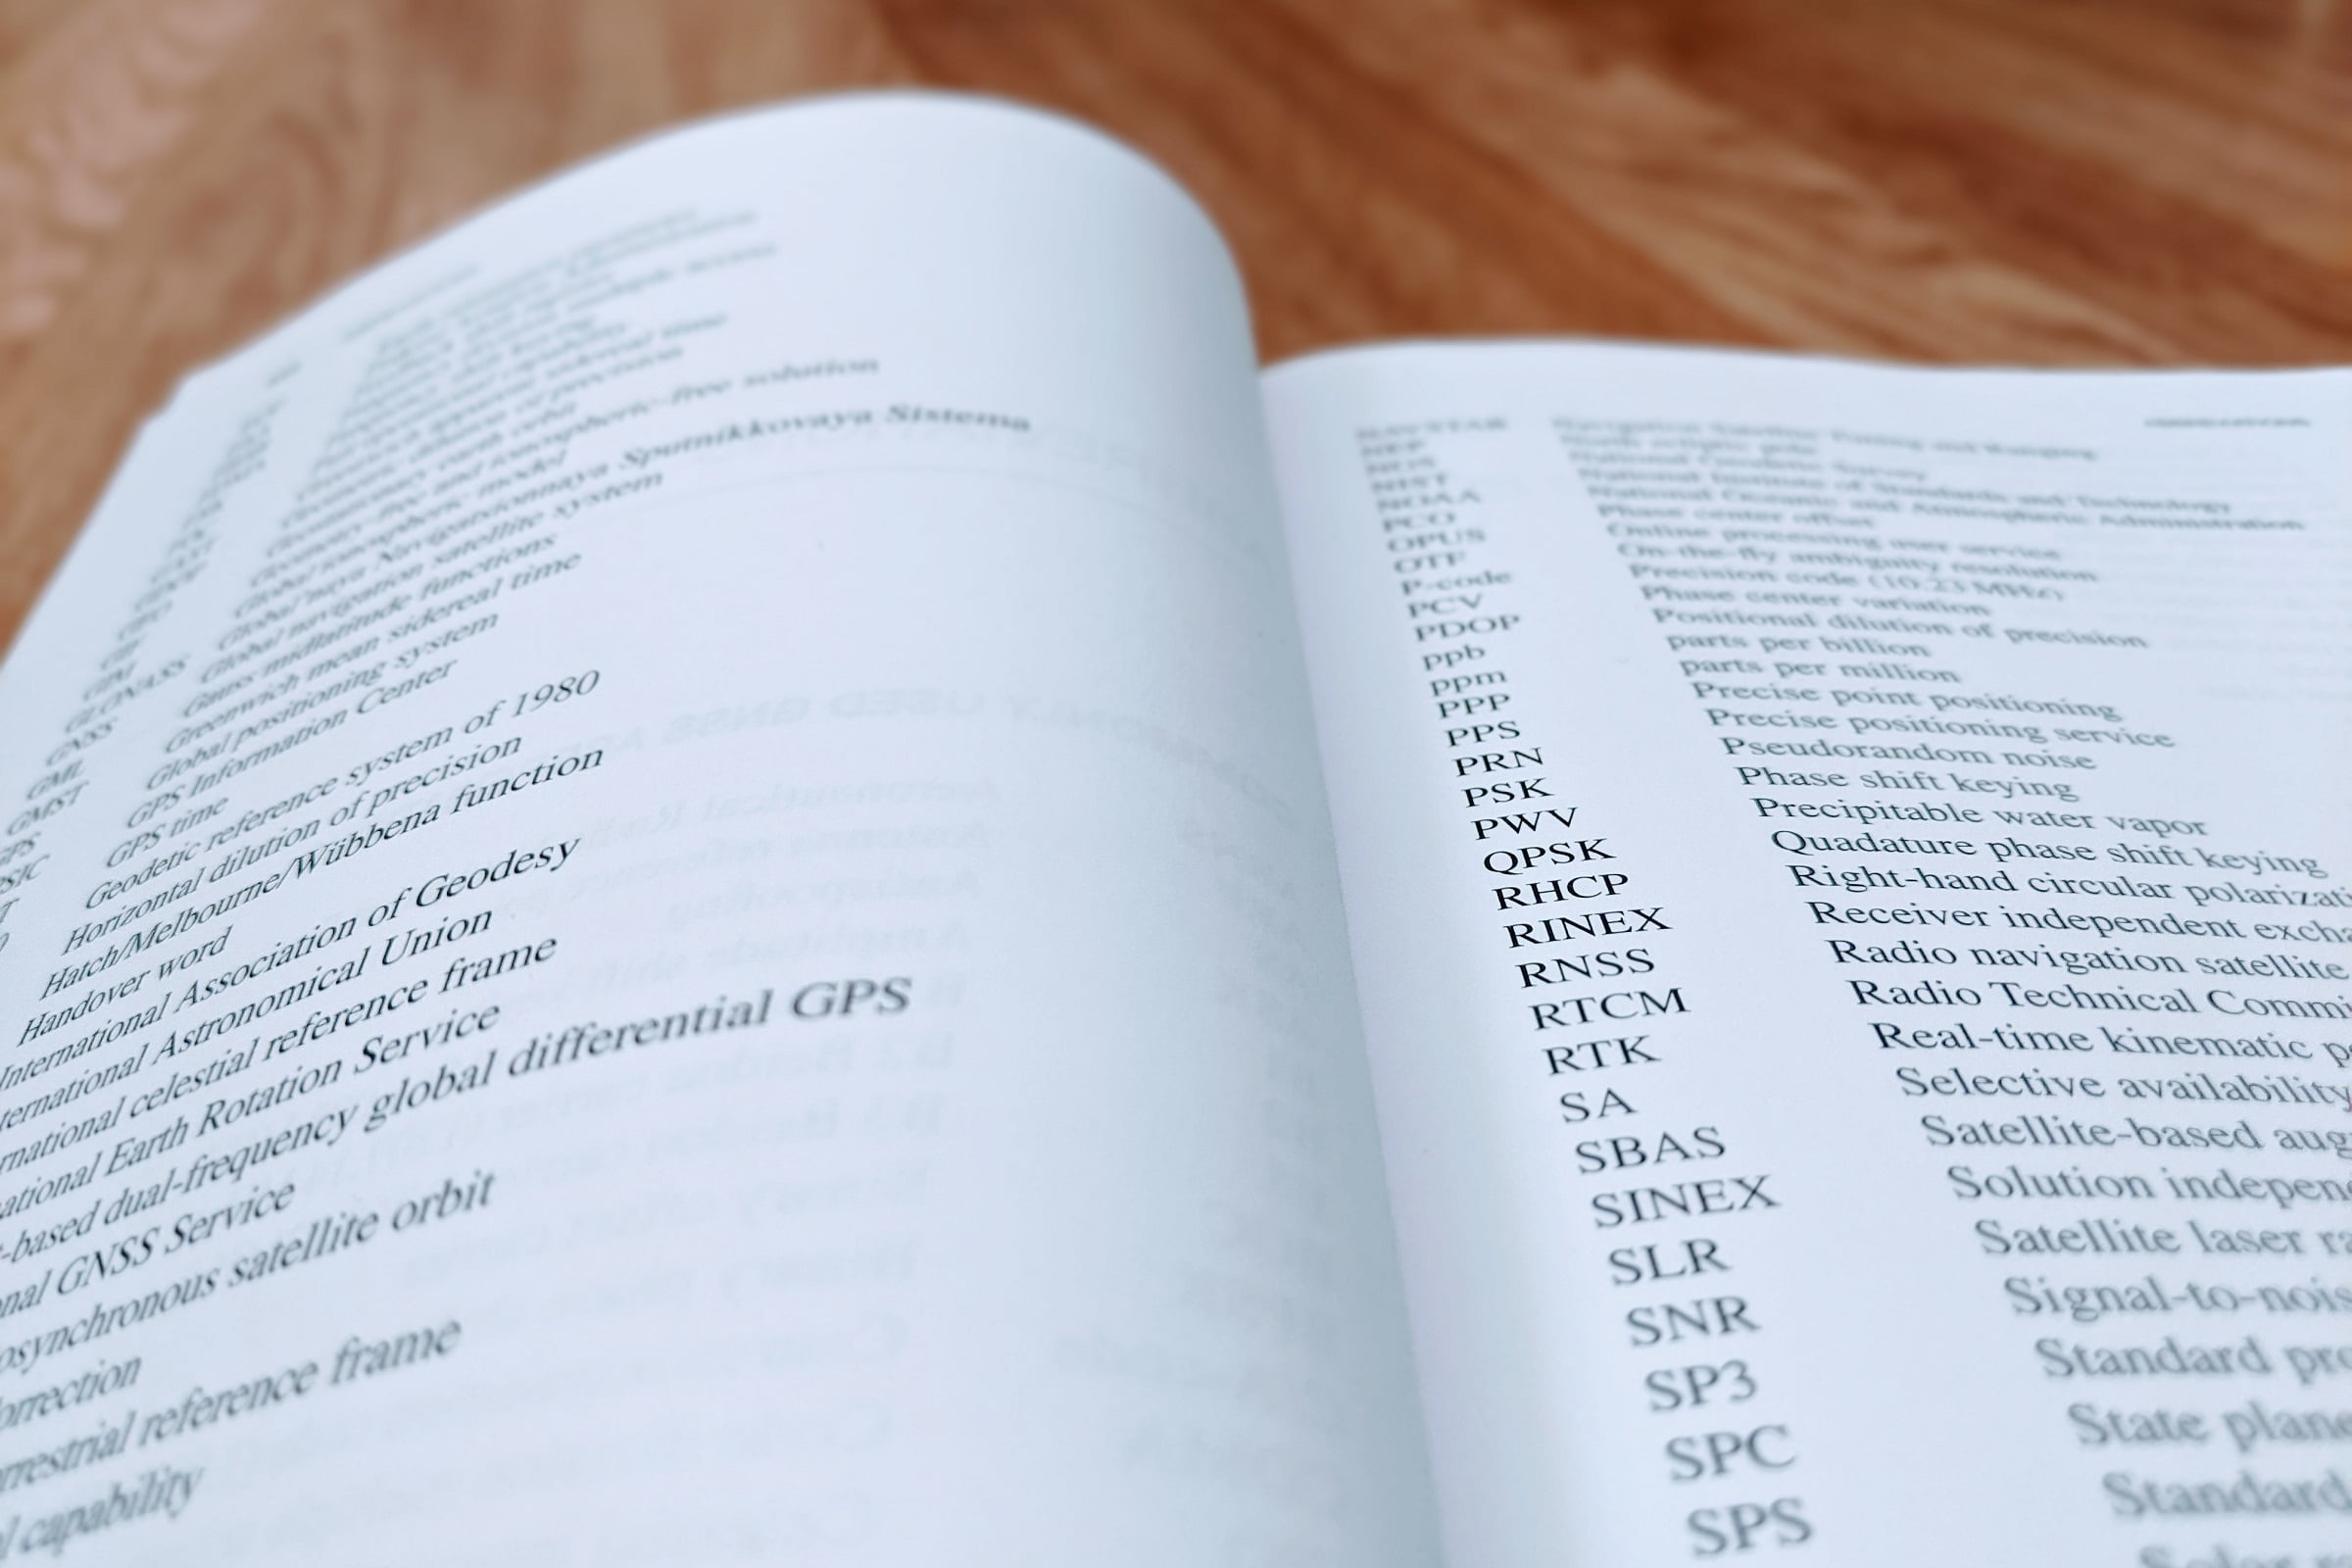 Terminology List in Book